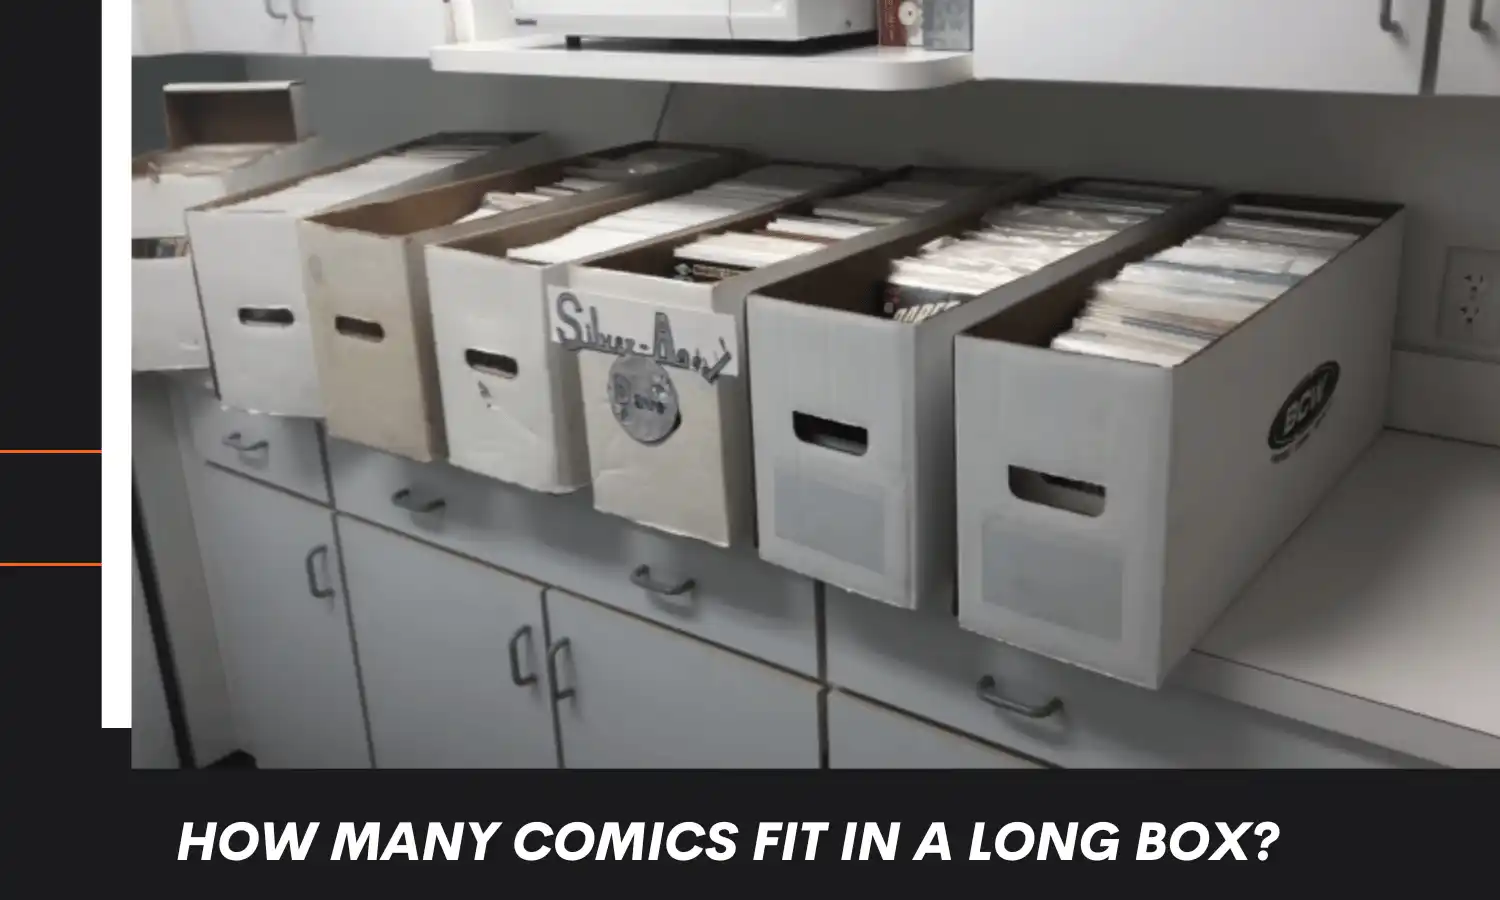 Comics Fit in a Long Box